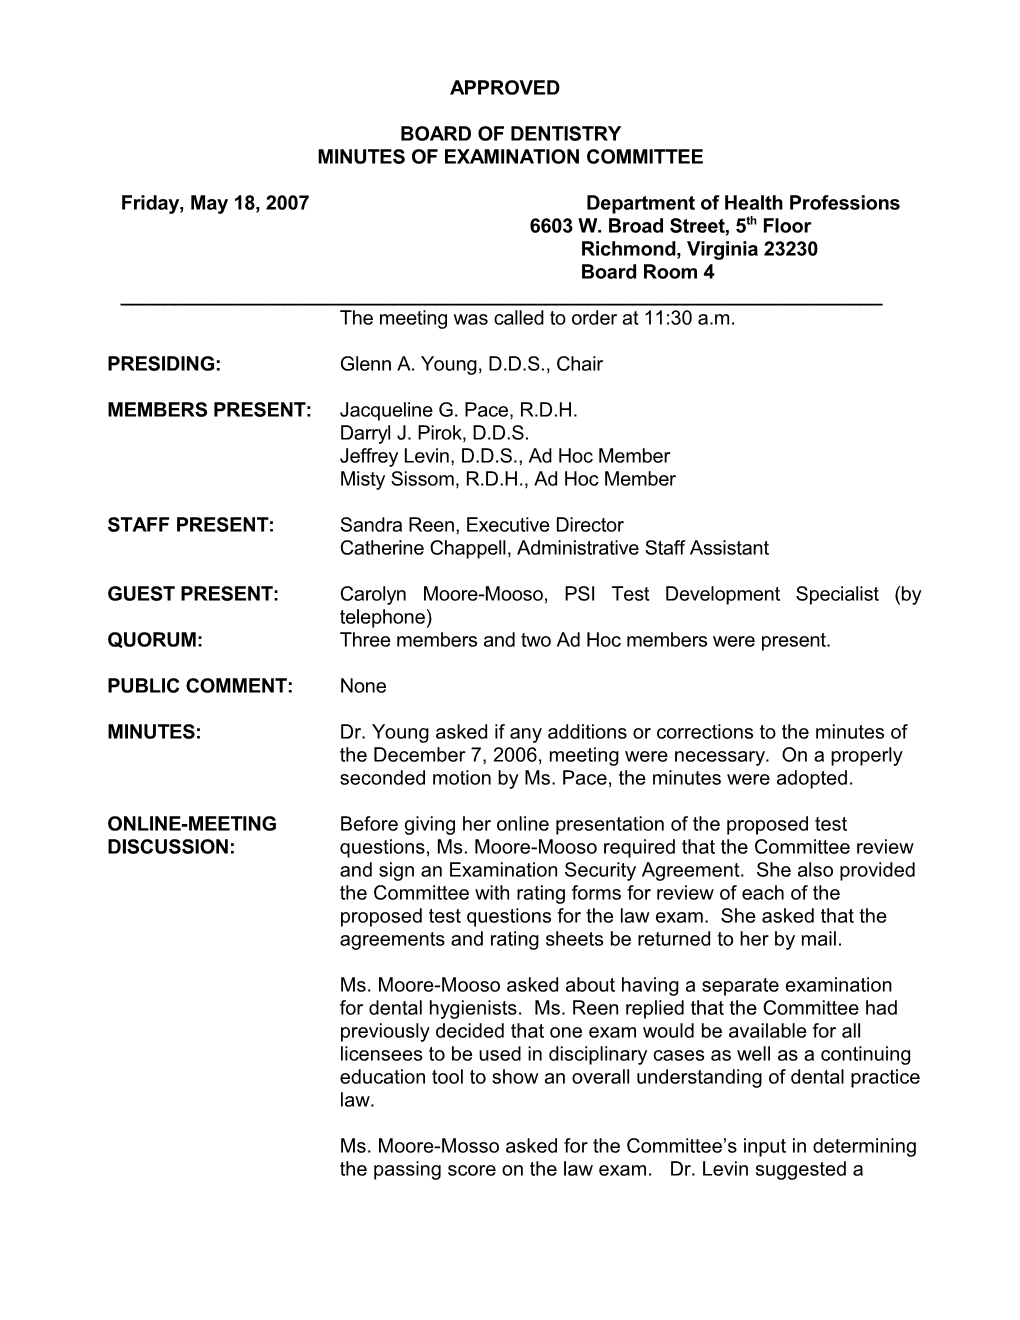 Virginia Board of Dentistry Minutes 05-18-2007